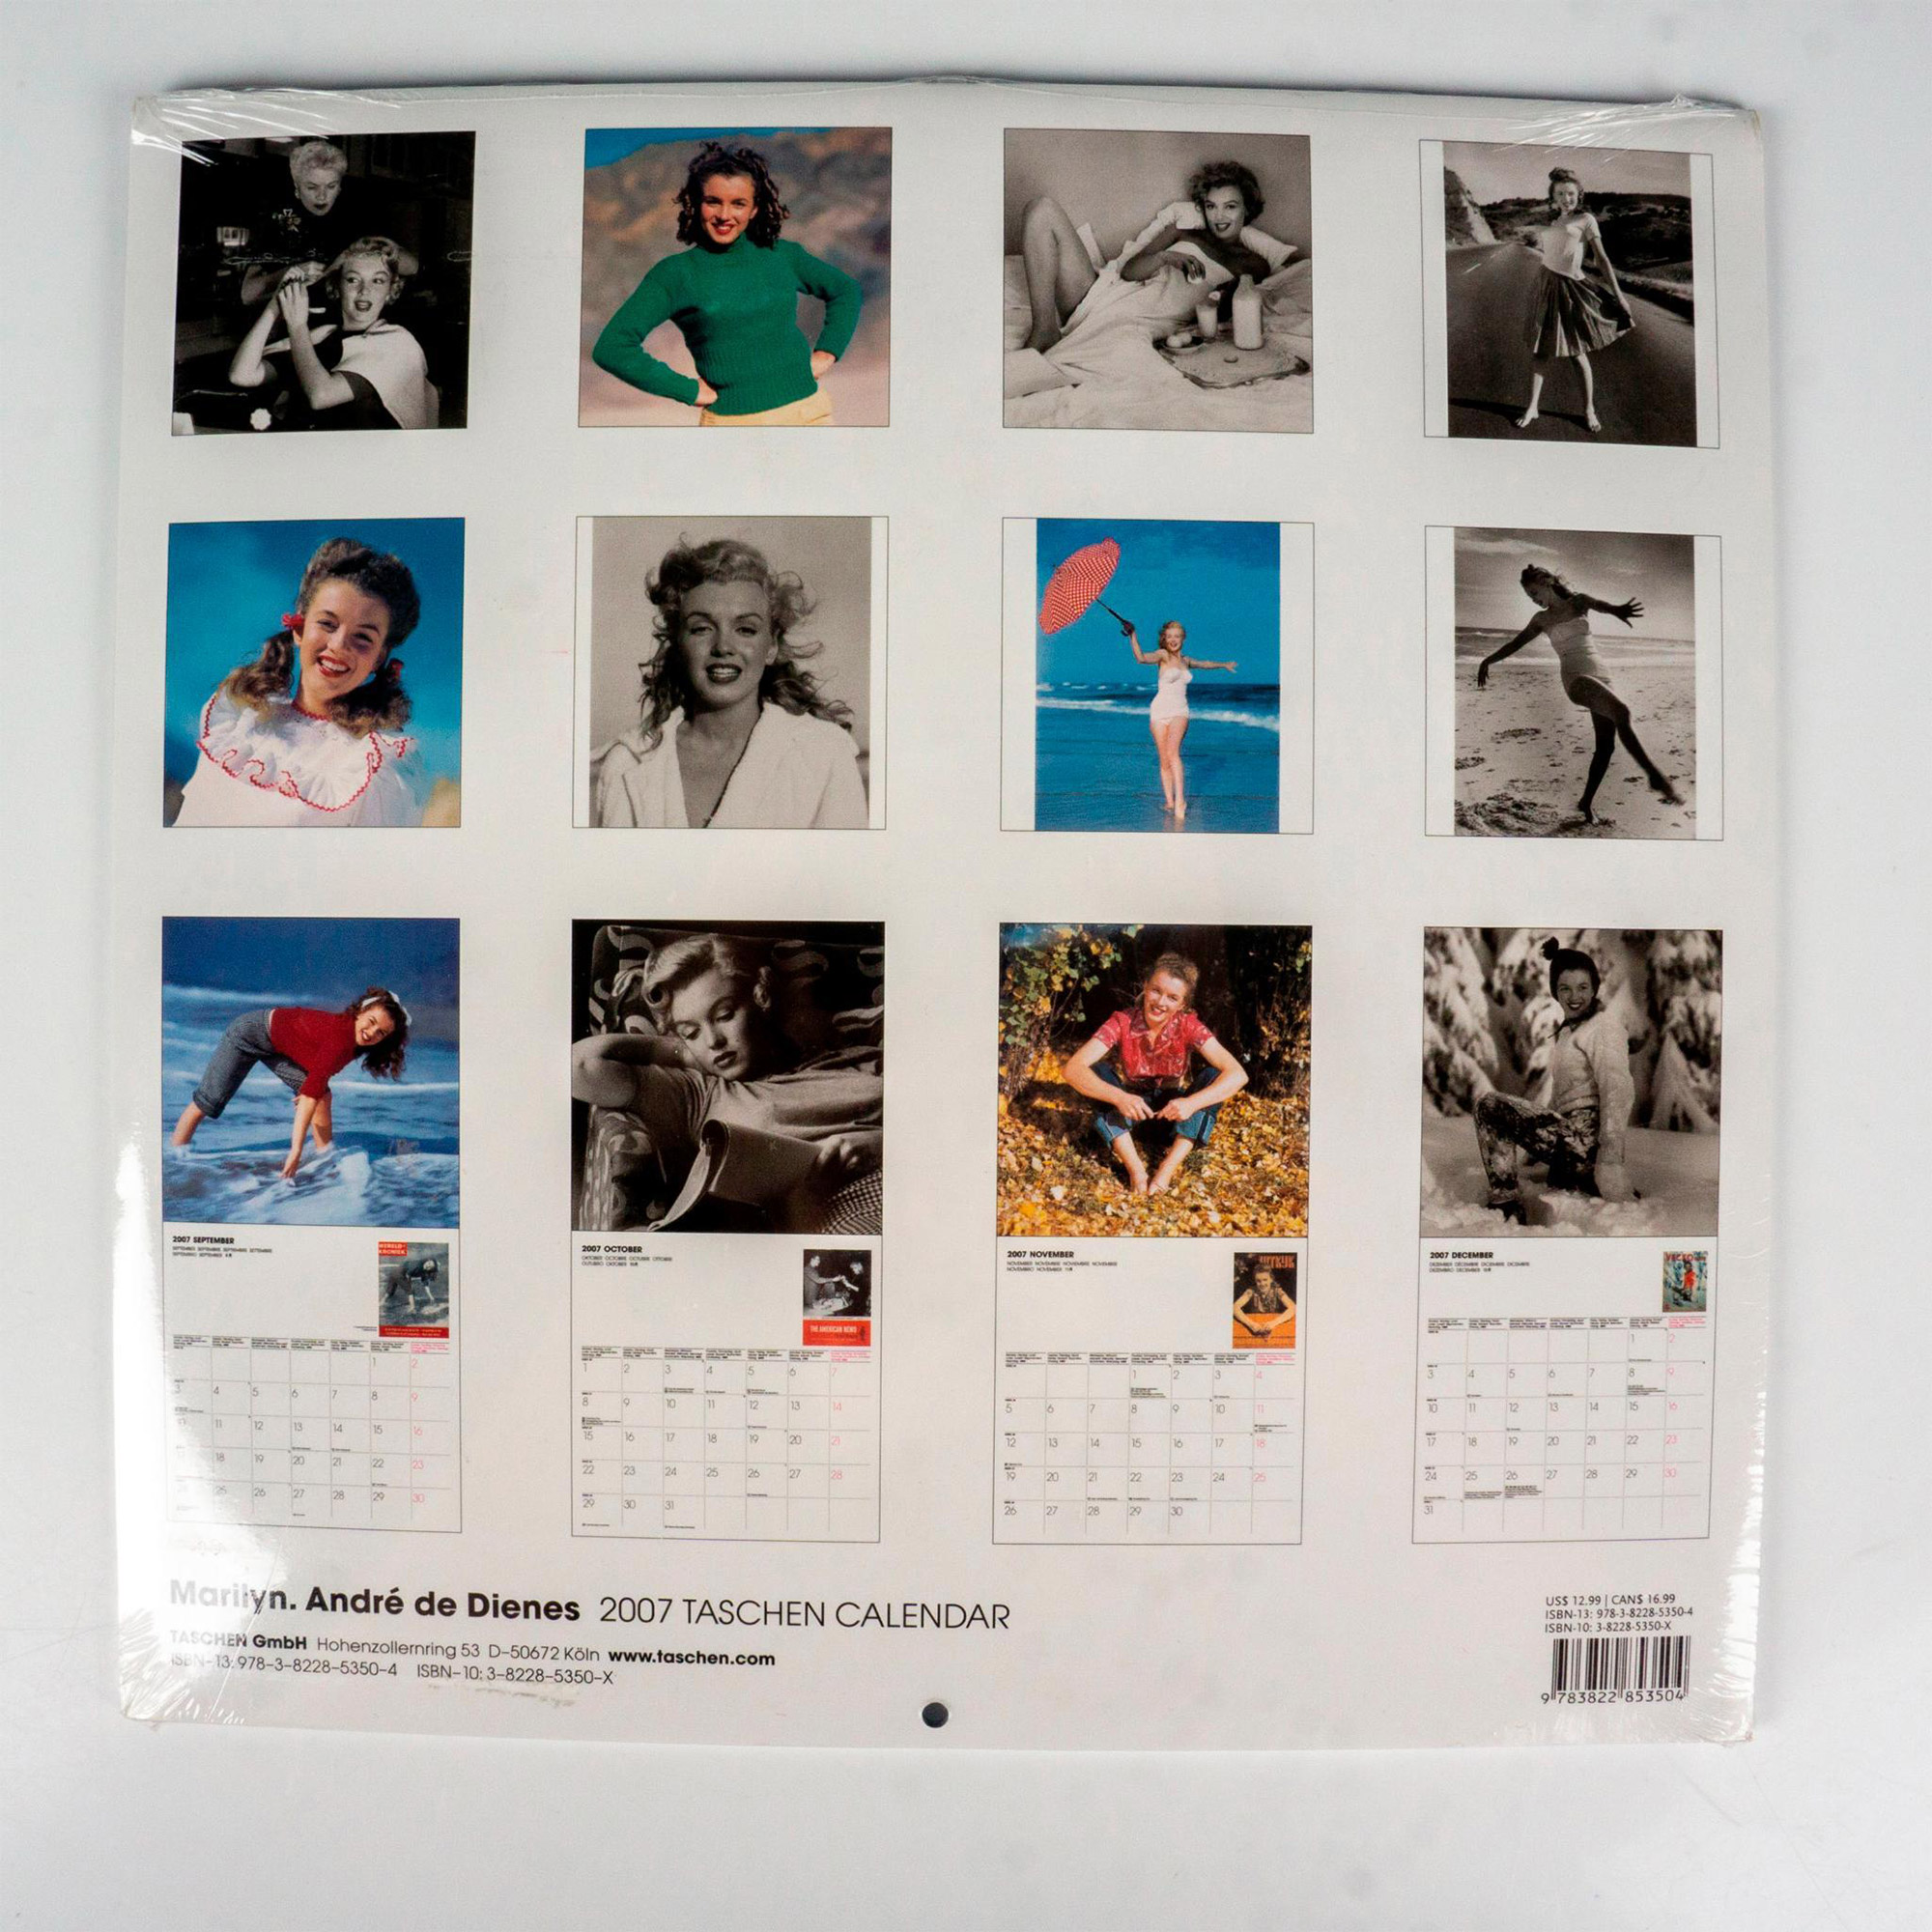 Taschen Calendar, Marilyn by Andre de Dienes 2007 - Image 2 of 2